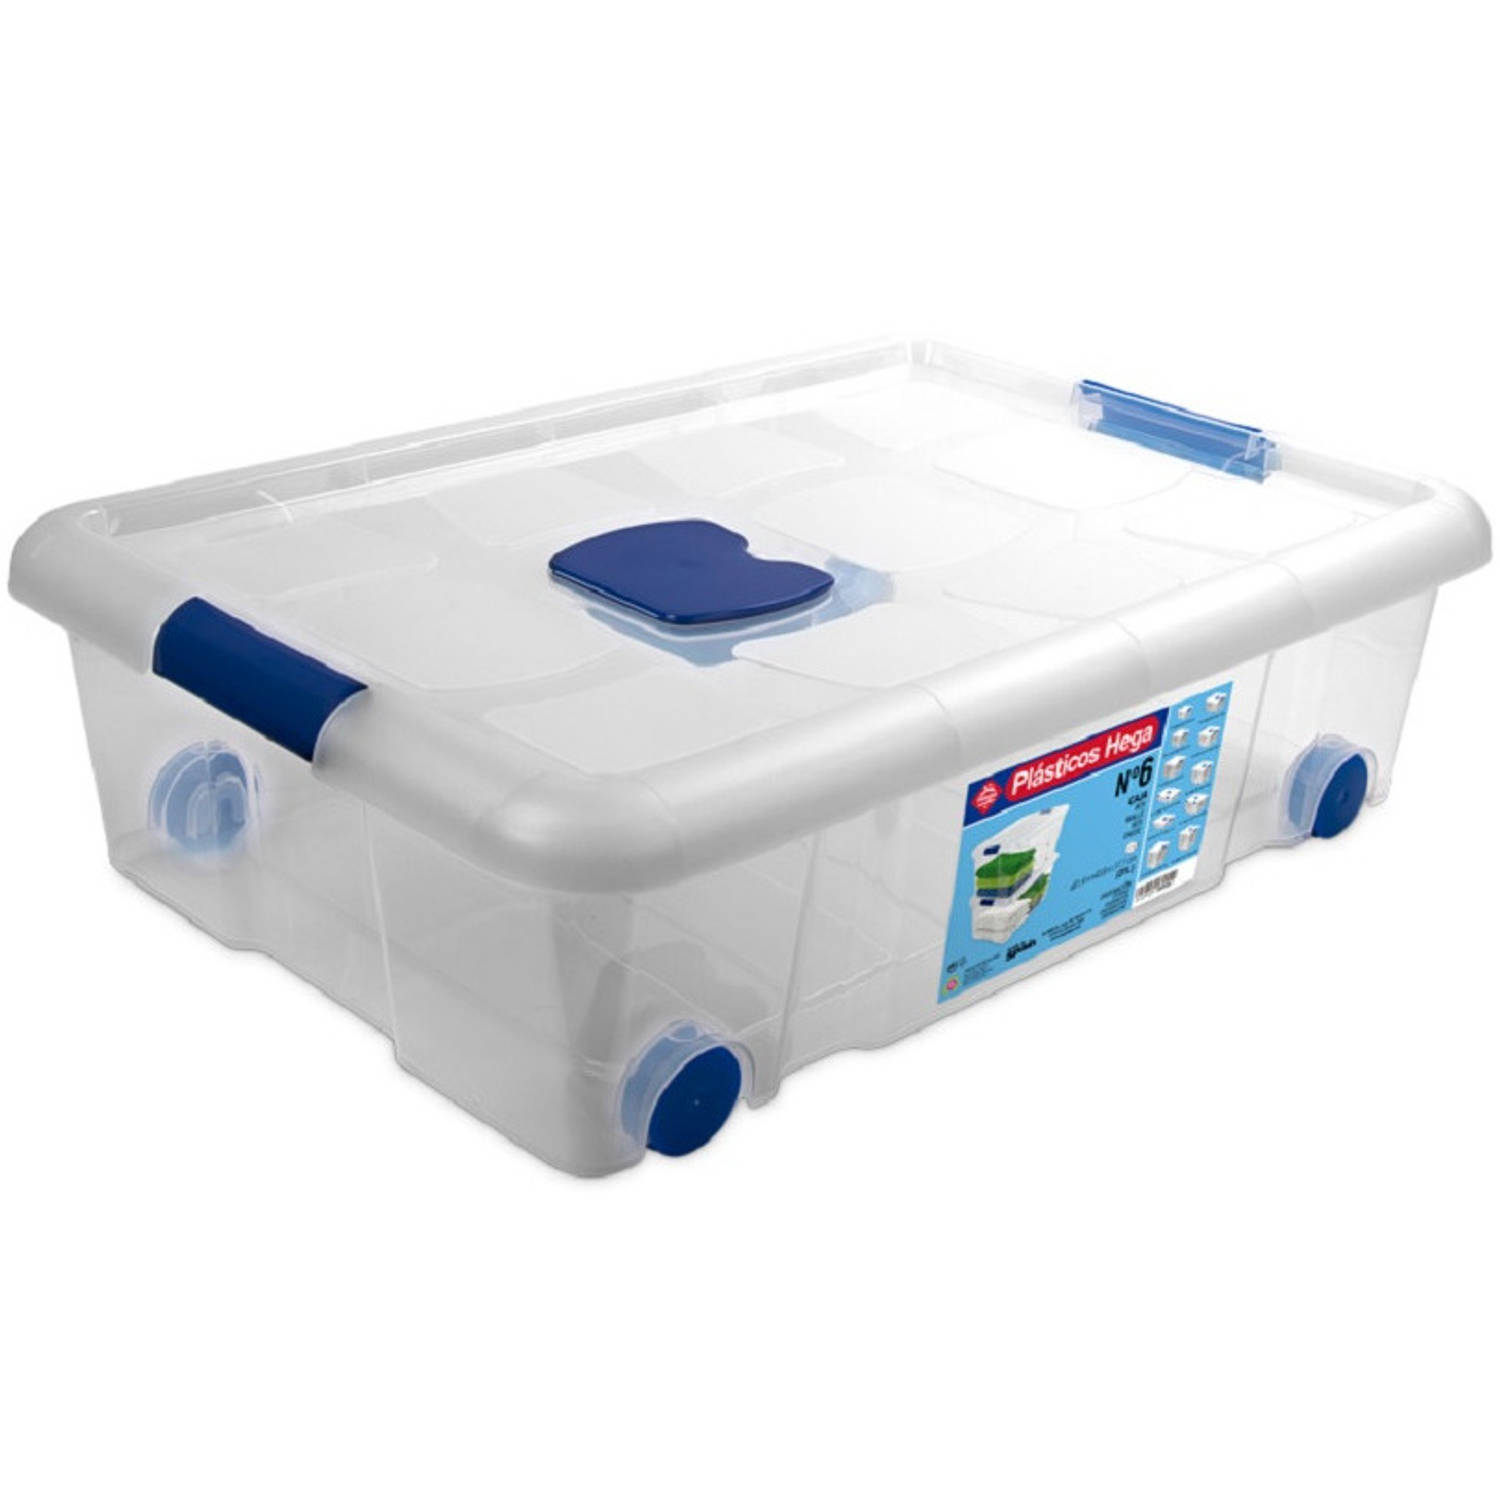 1x met deksel en wieltjes 31 liter kunststof transparant/blauw - Opbergbox |